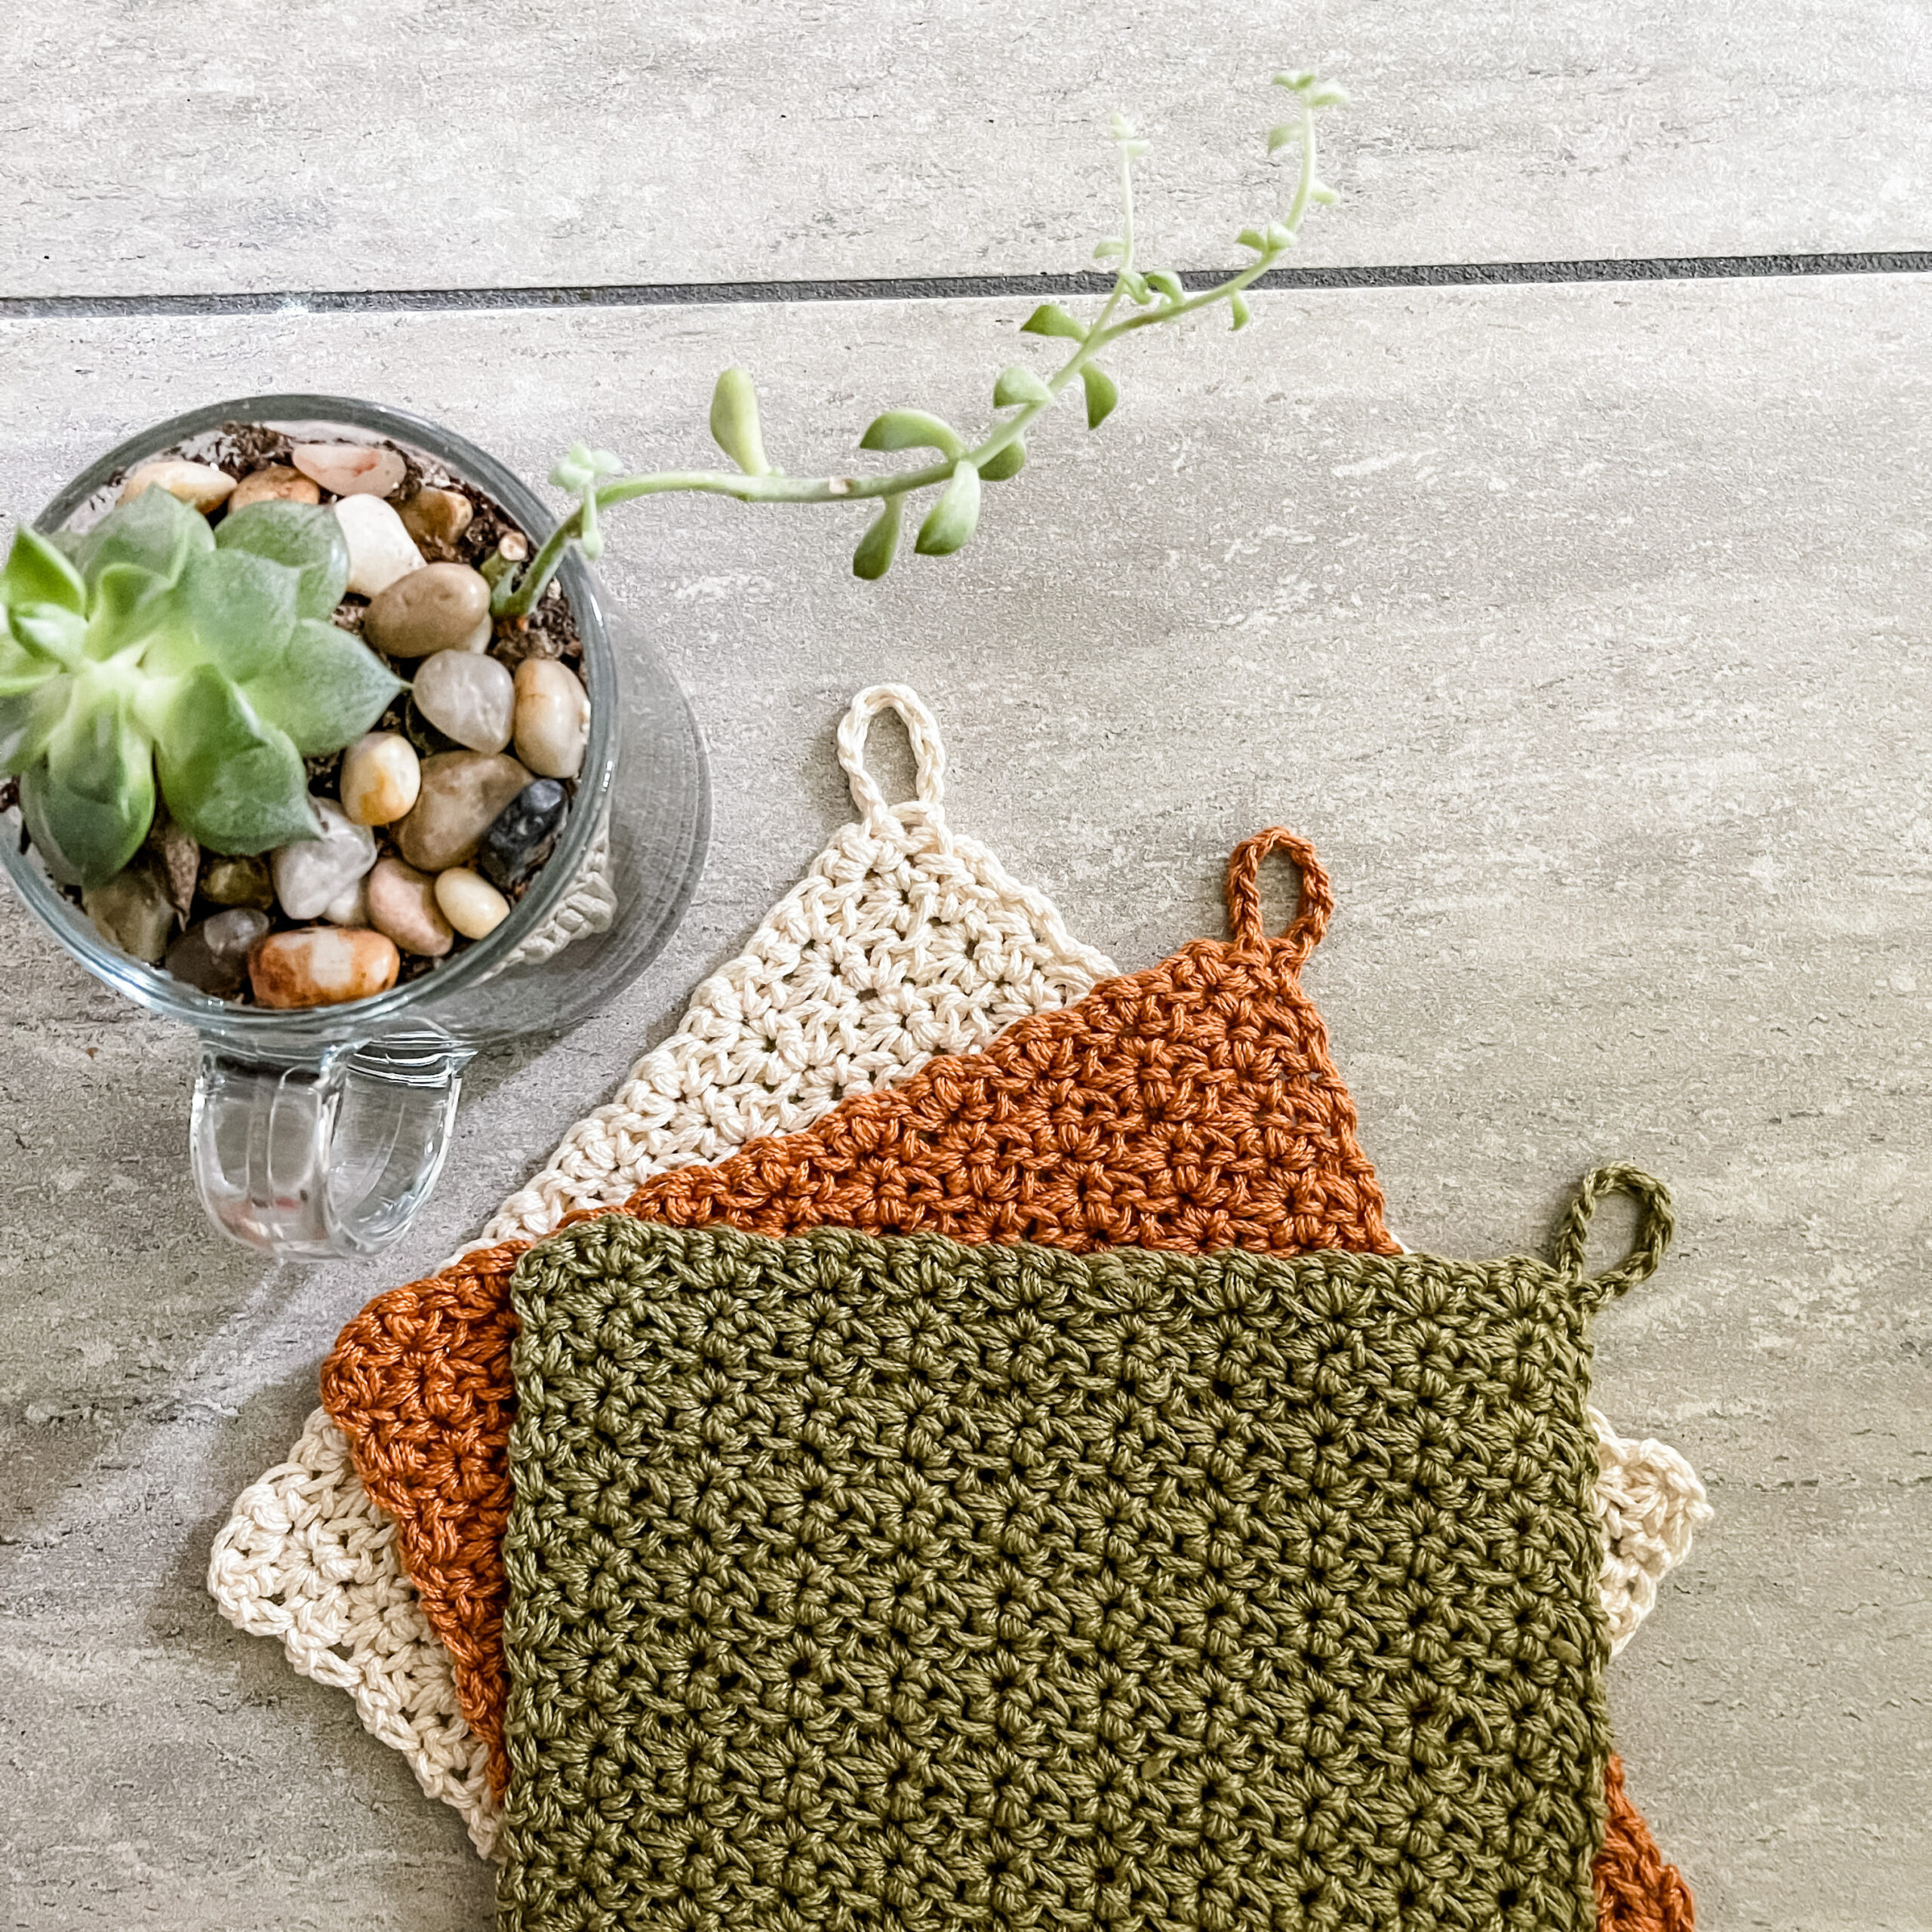 Stuff better for better shaping. #crochet #handmadeclothes